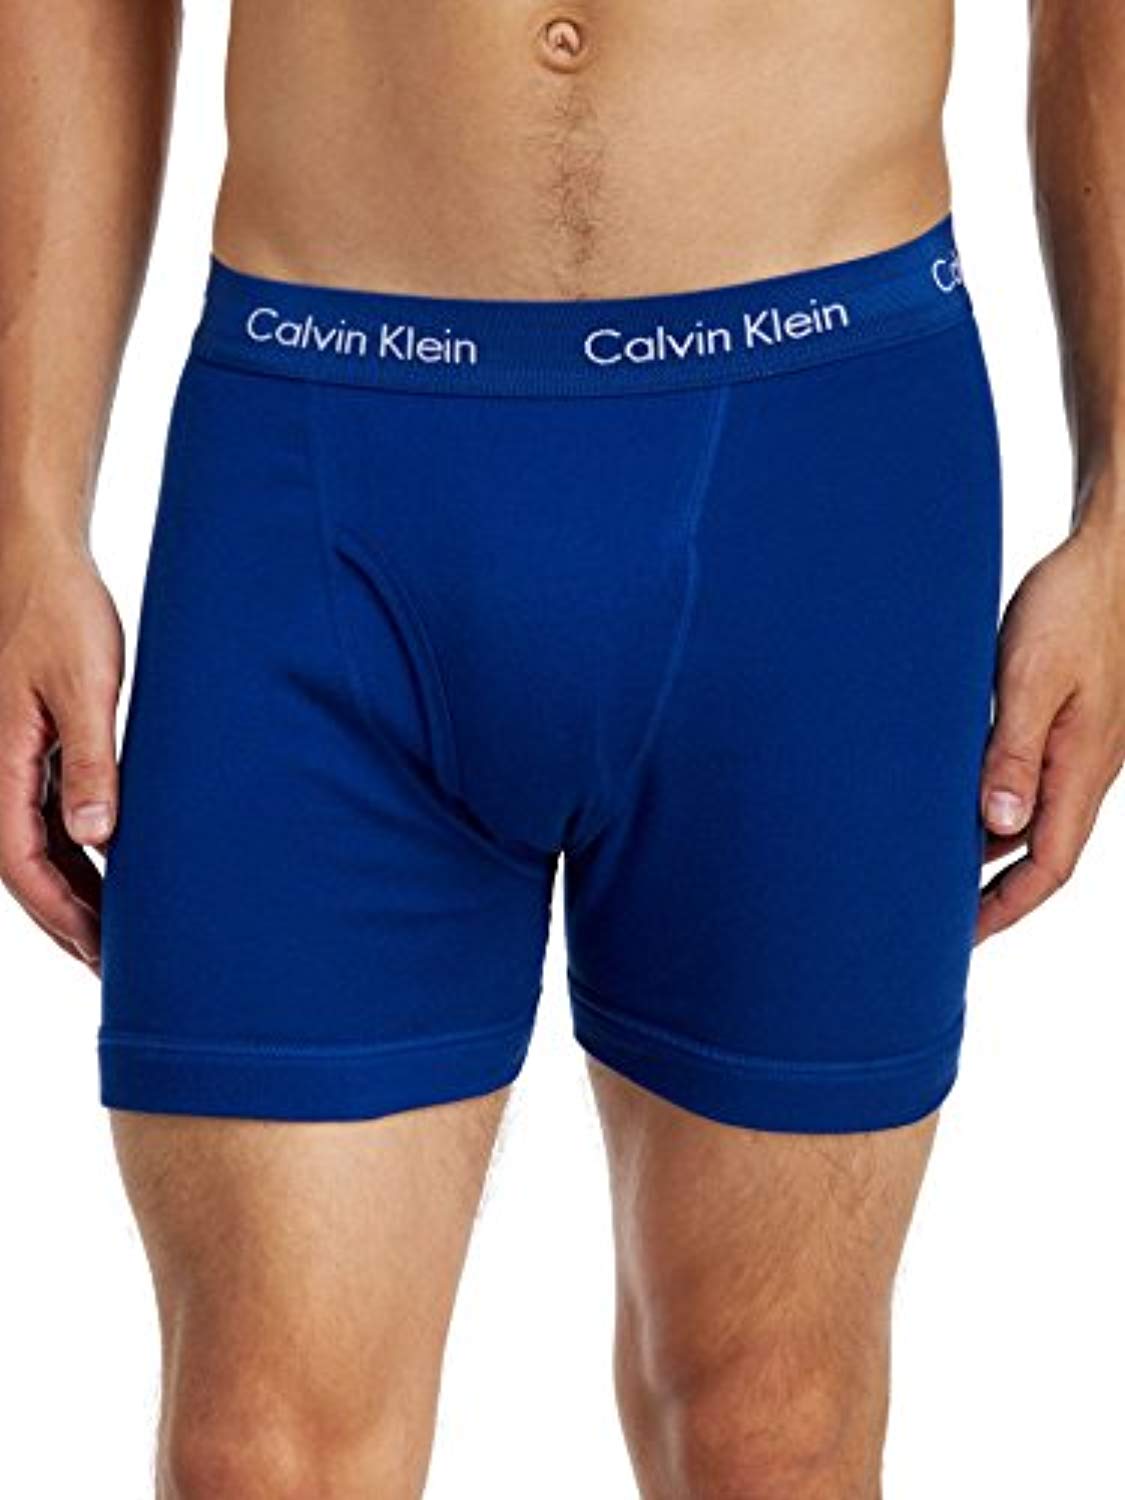 Calvin Klein Boys' Modern Cotton Assorted Boxer Briefs, Size: Medium, Blue